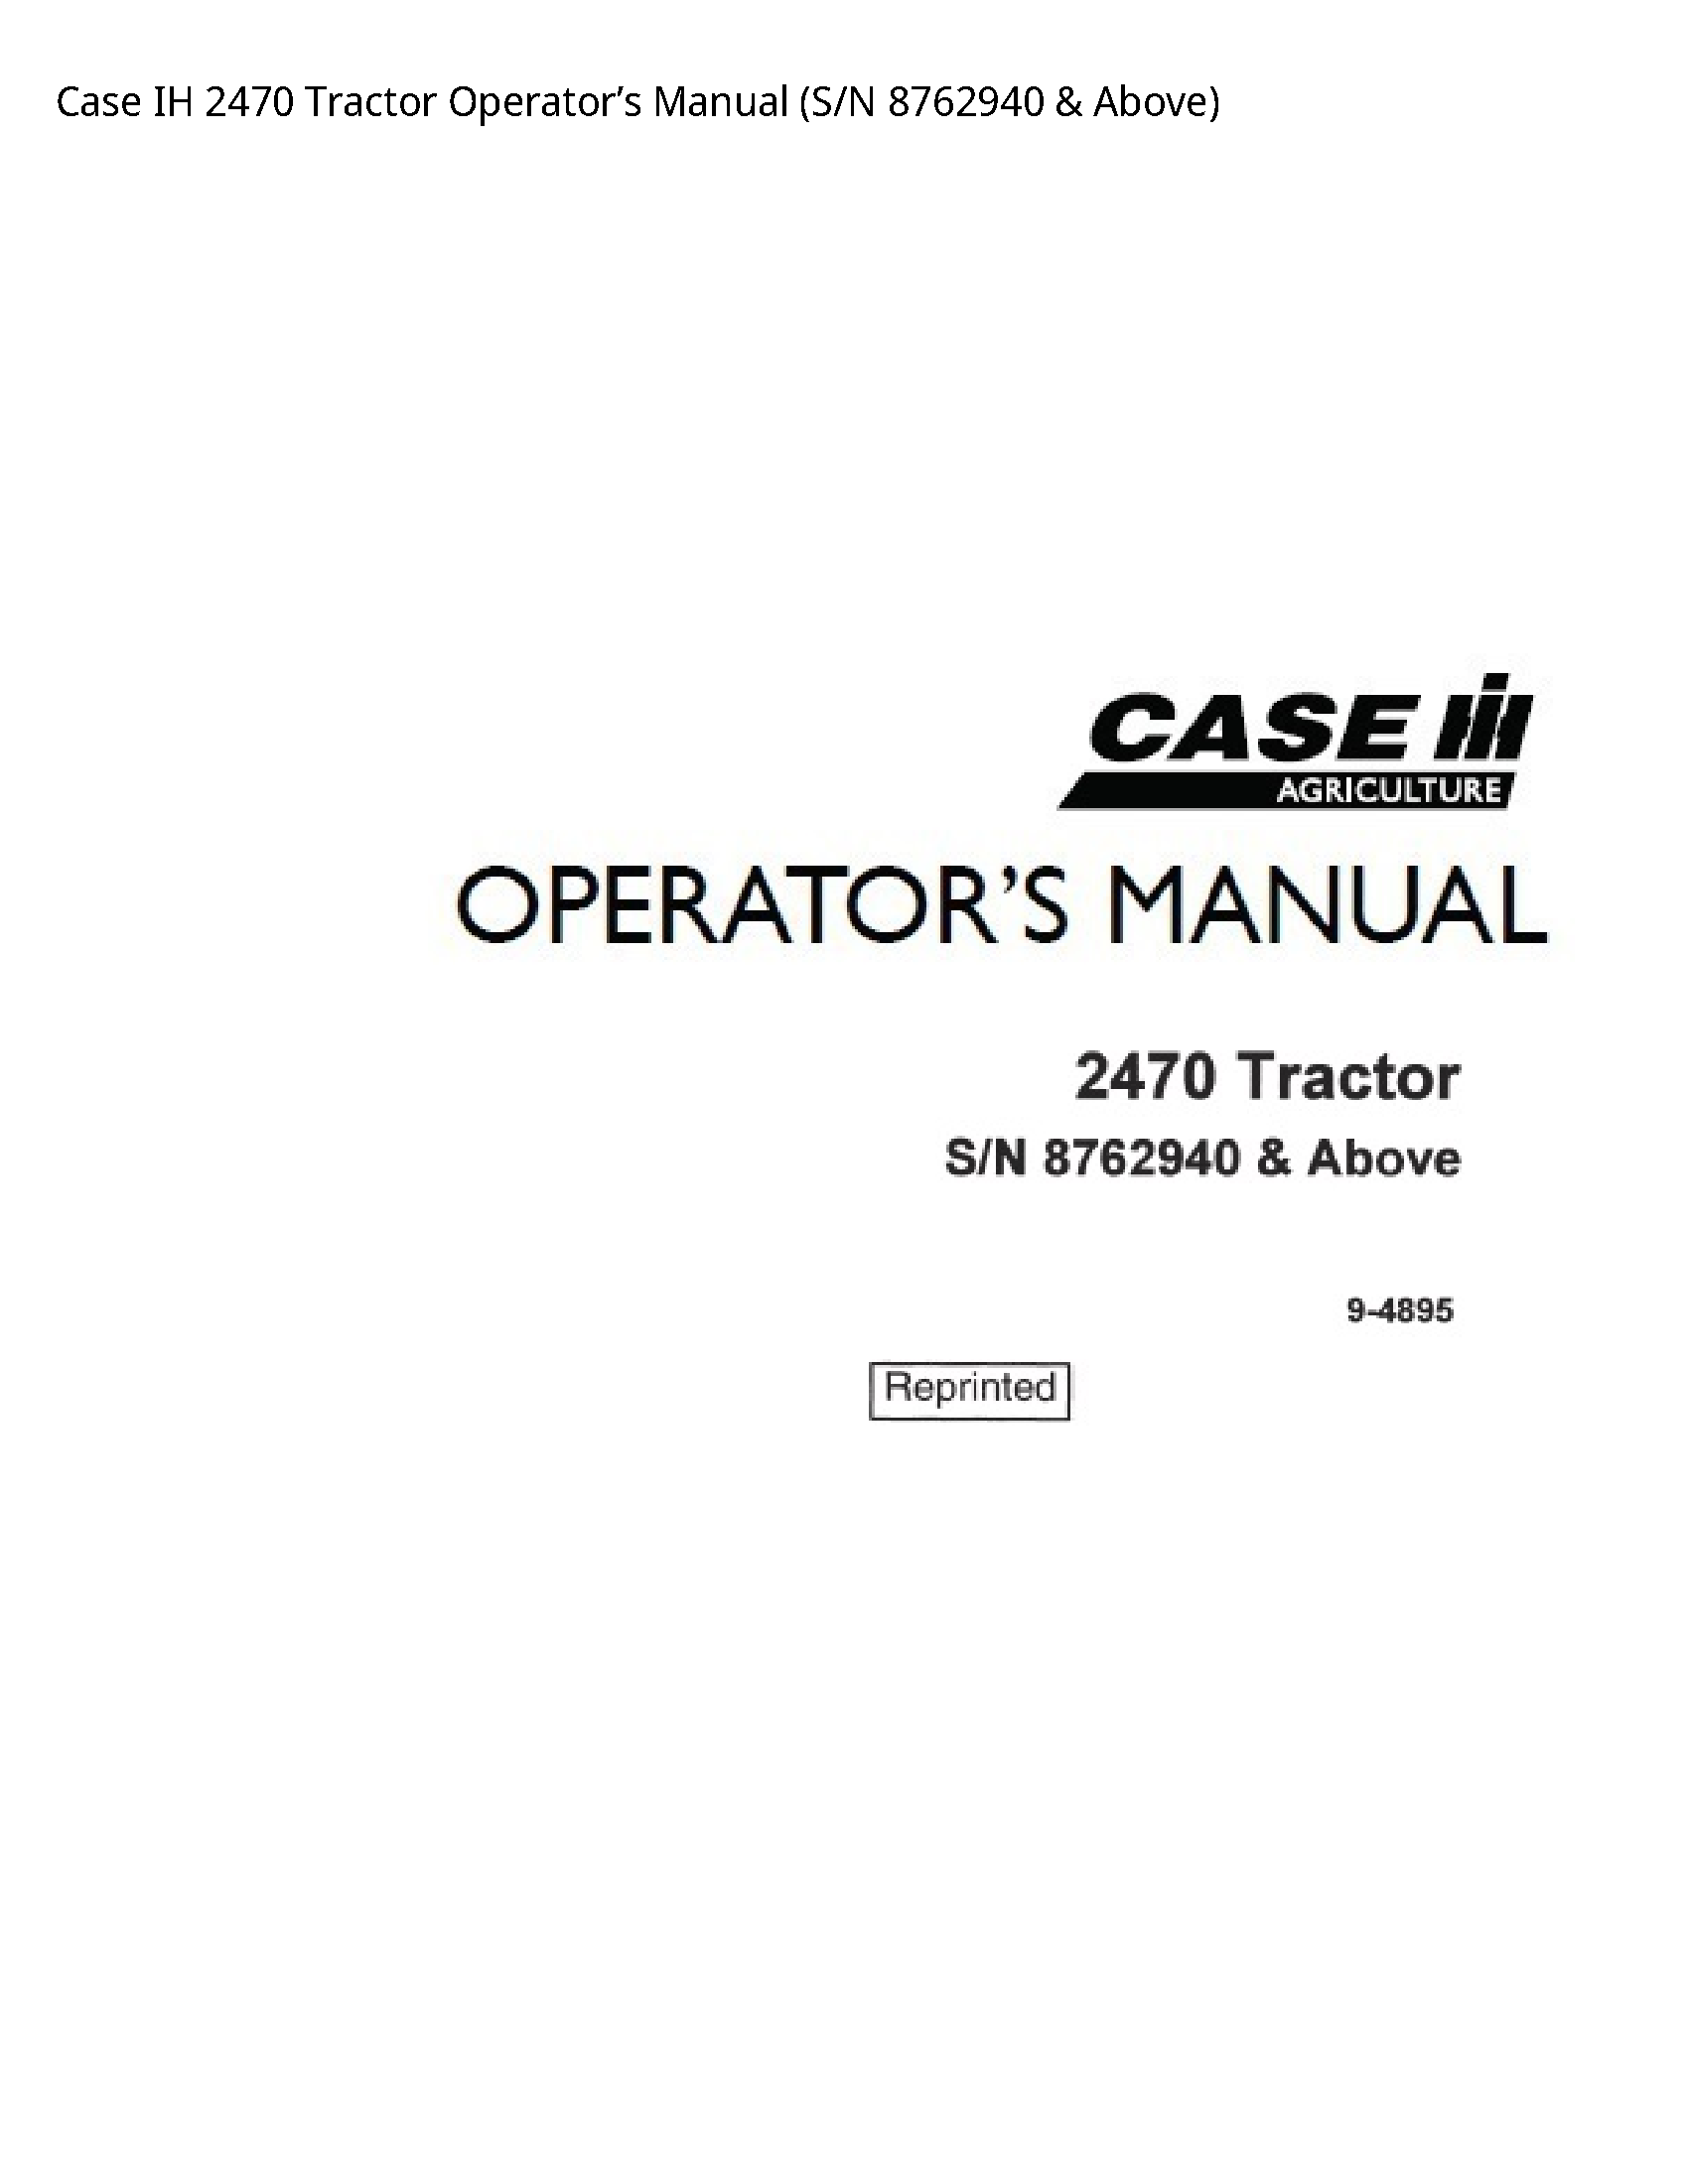 Case/Case IH 2470 IH Tractor Operator’s manual